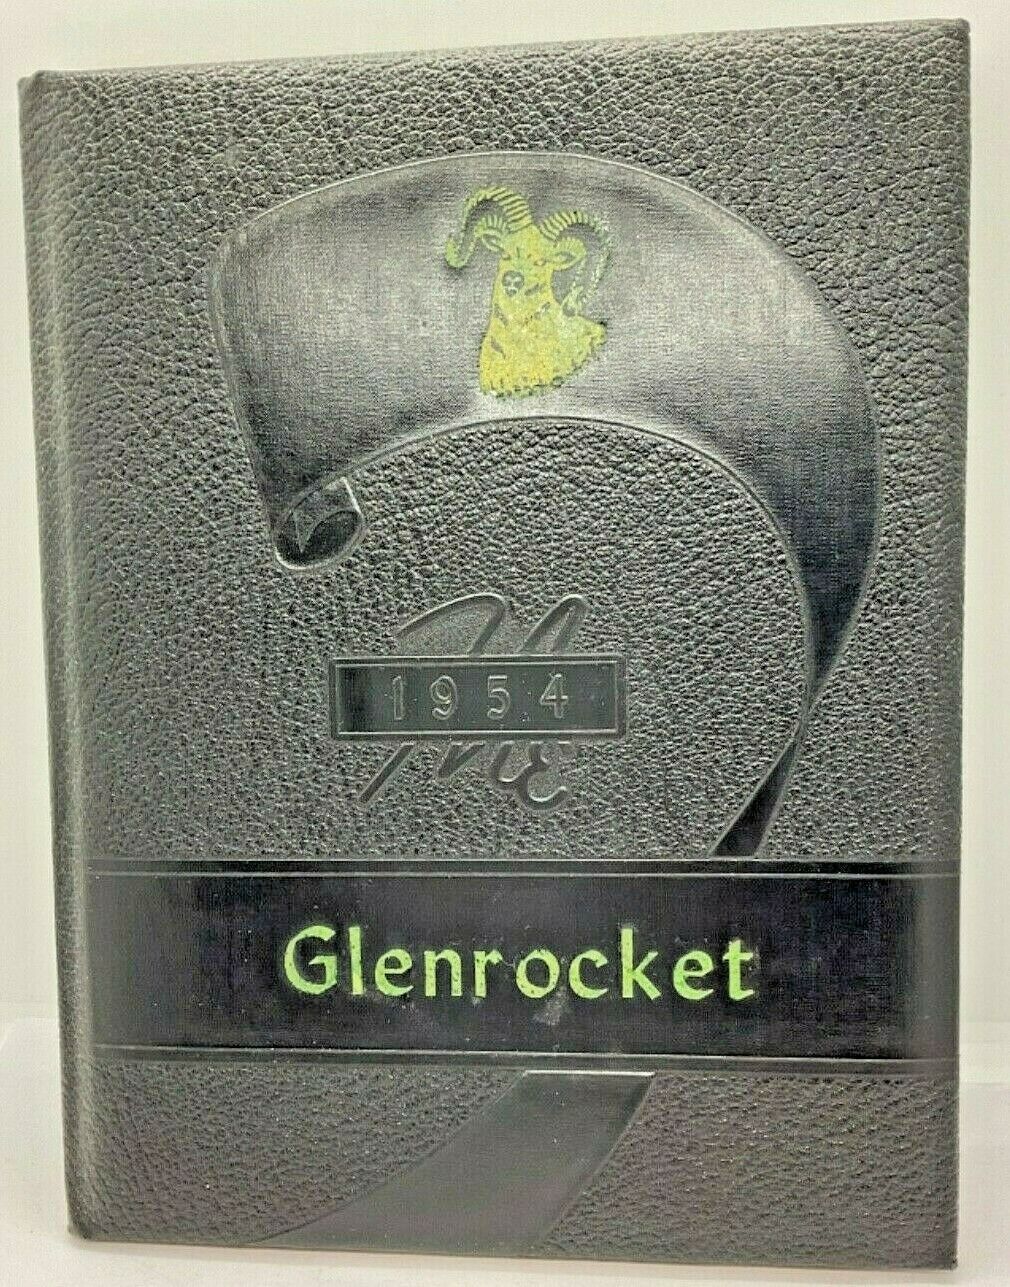 1954 Glen Rocket Glenrock Parkerton HS Year Book Annual Wyoming